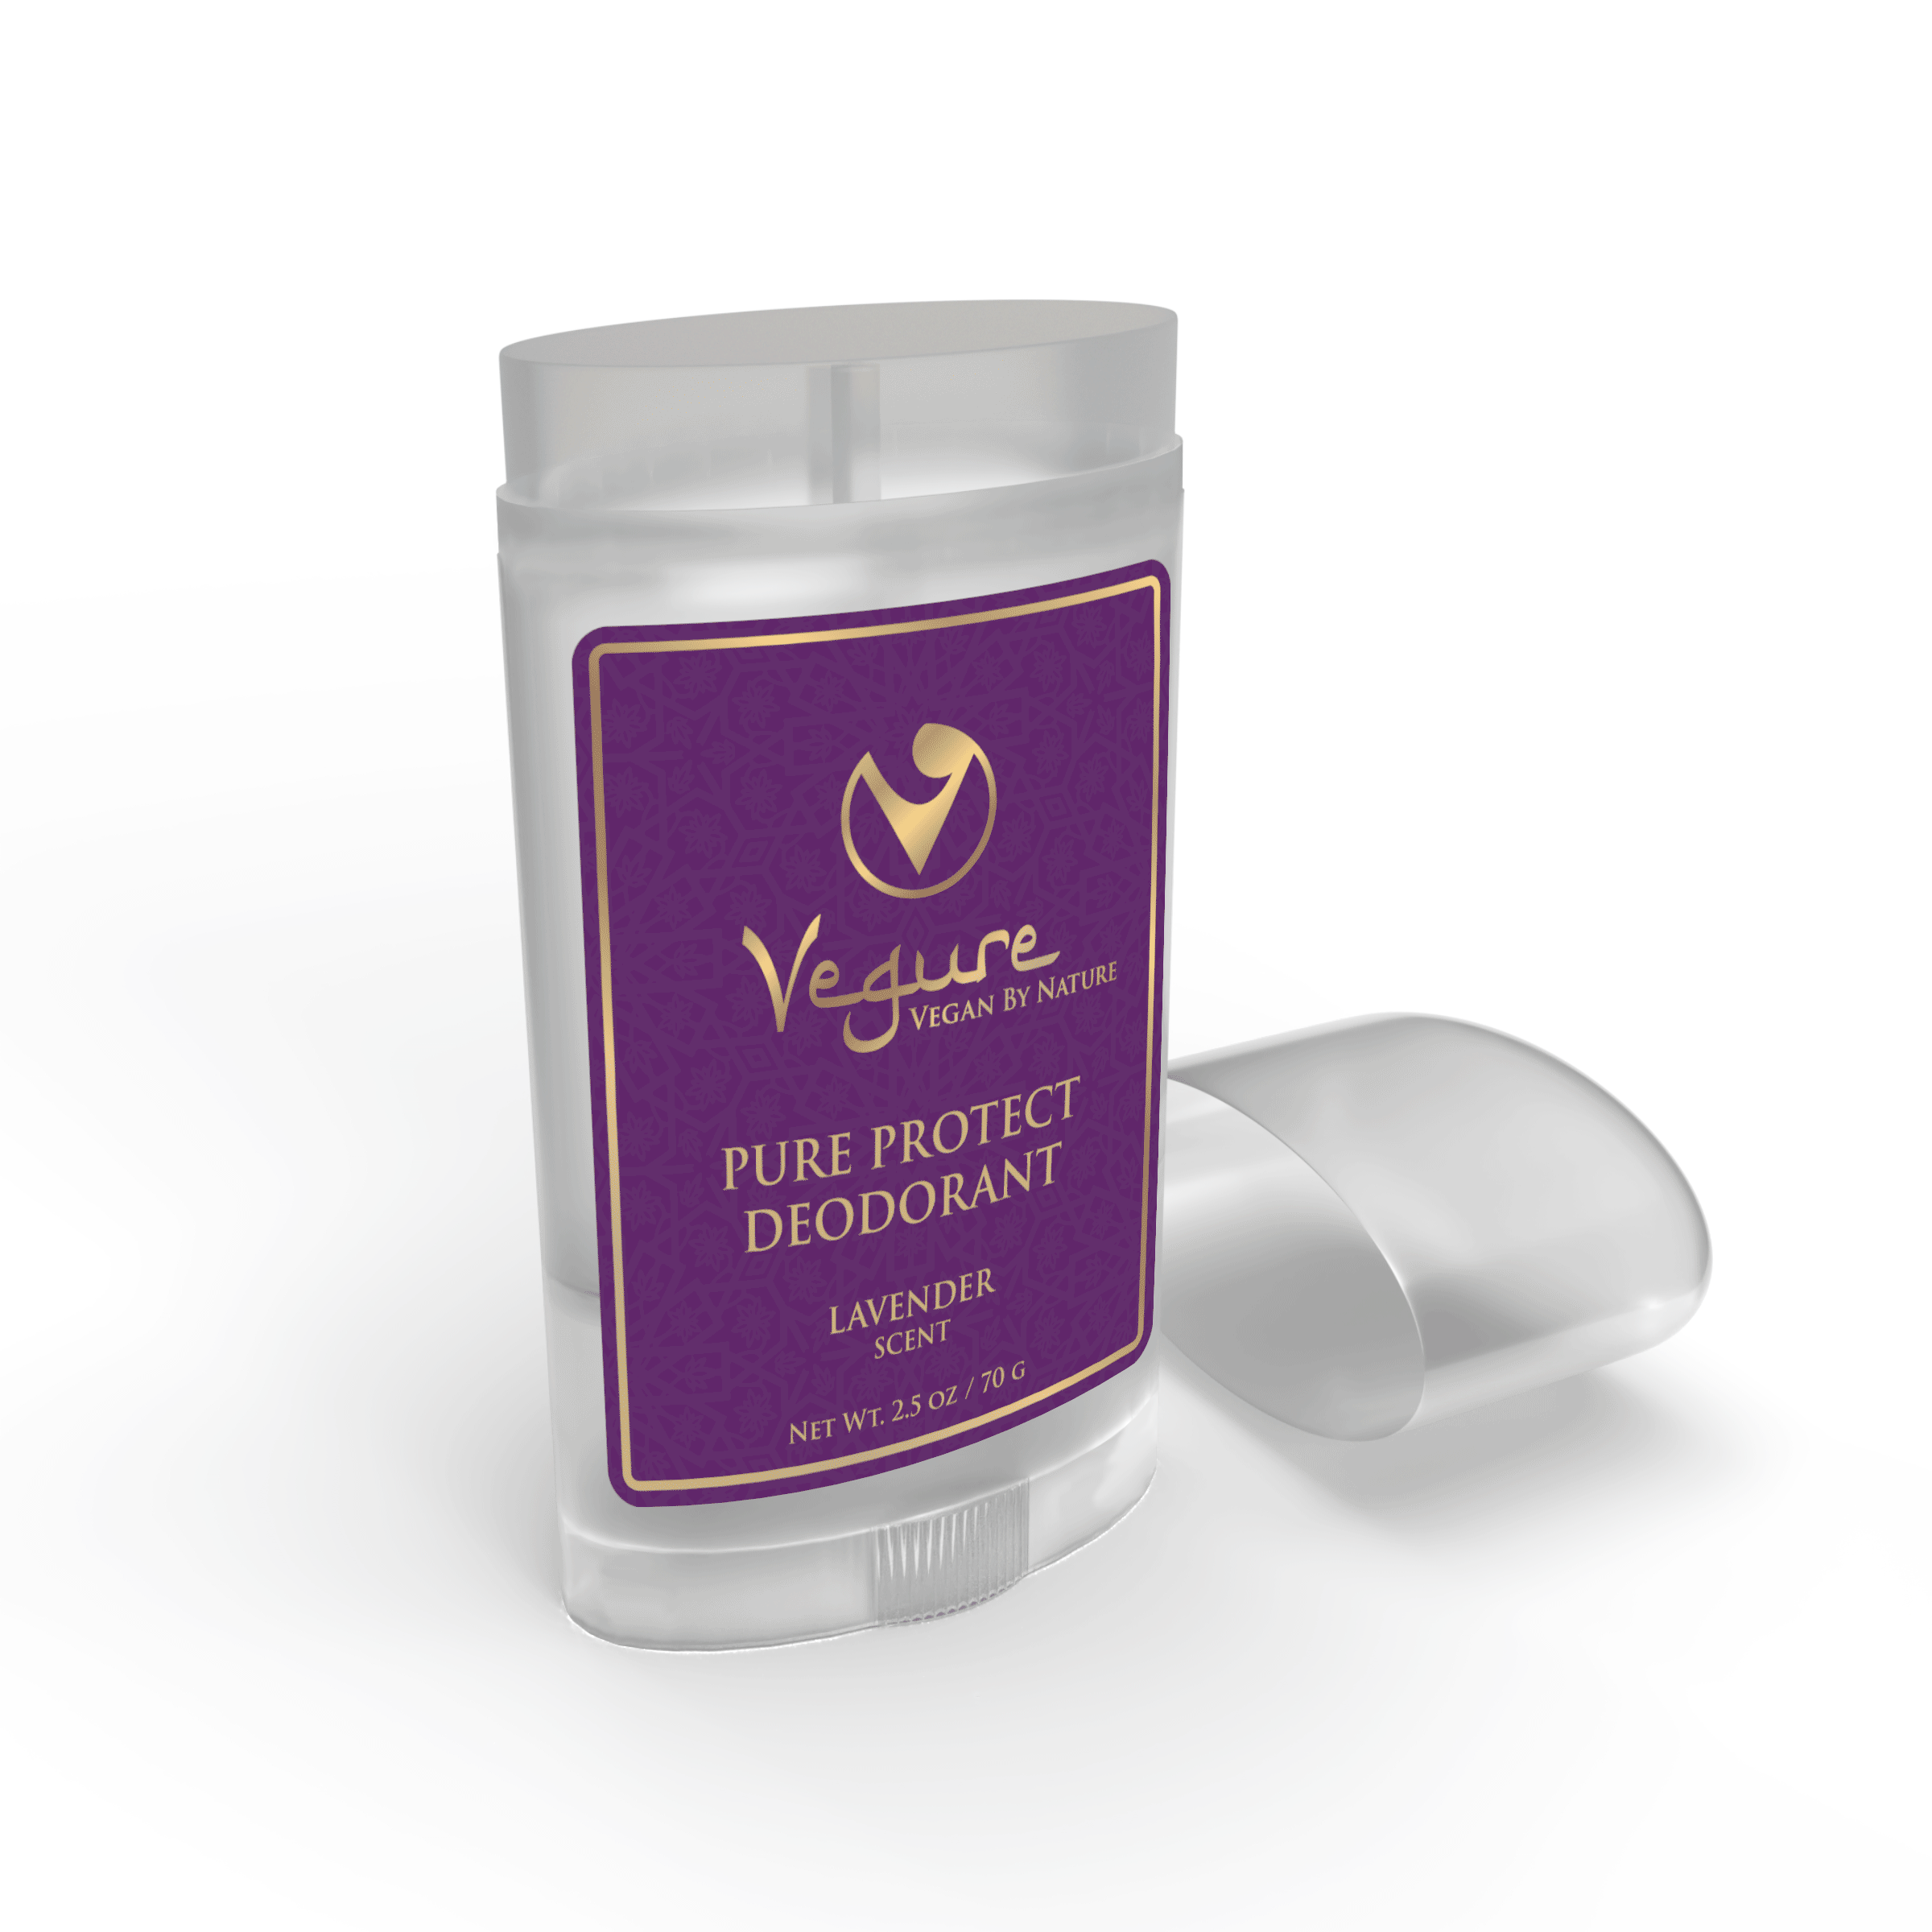 Lavender Pure Protect Deodorant Stick